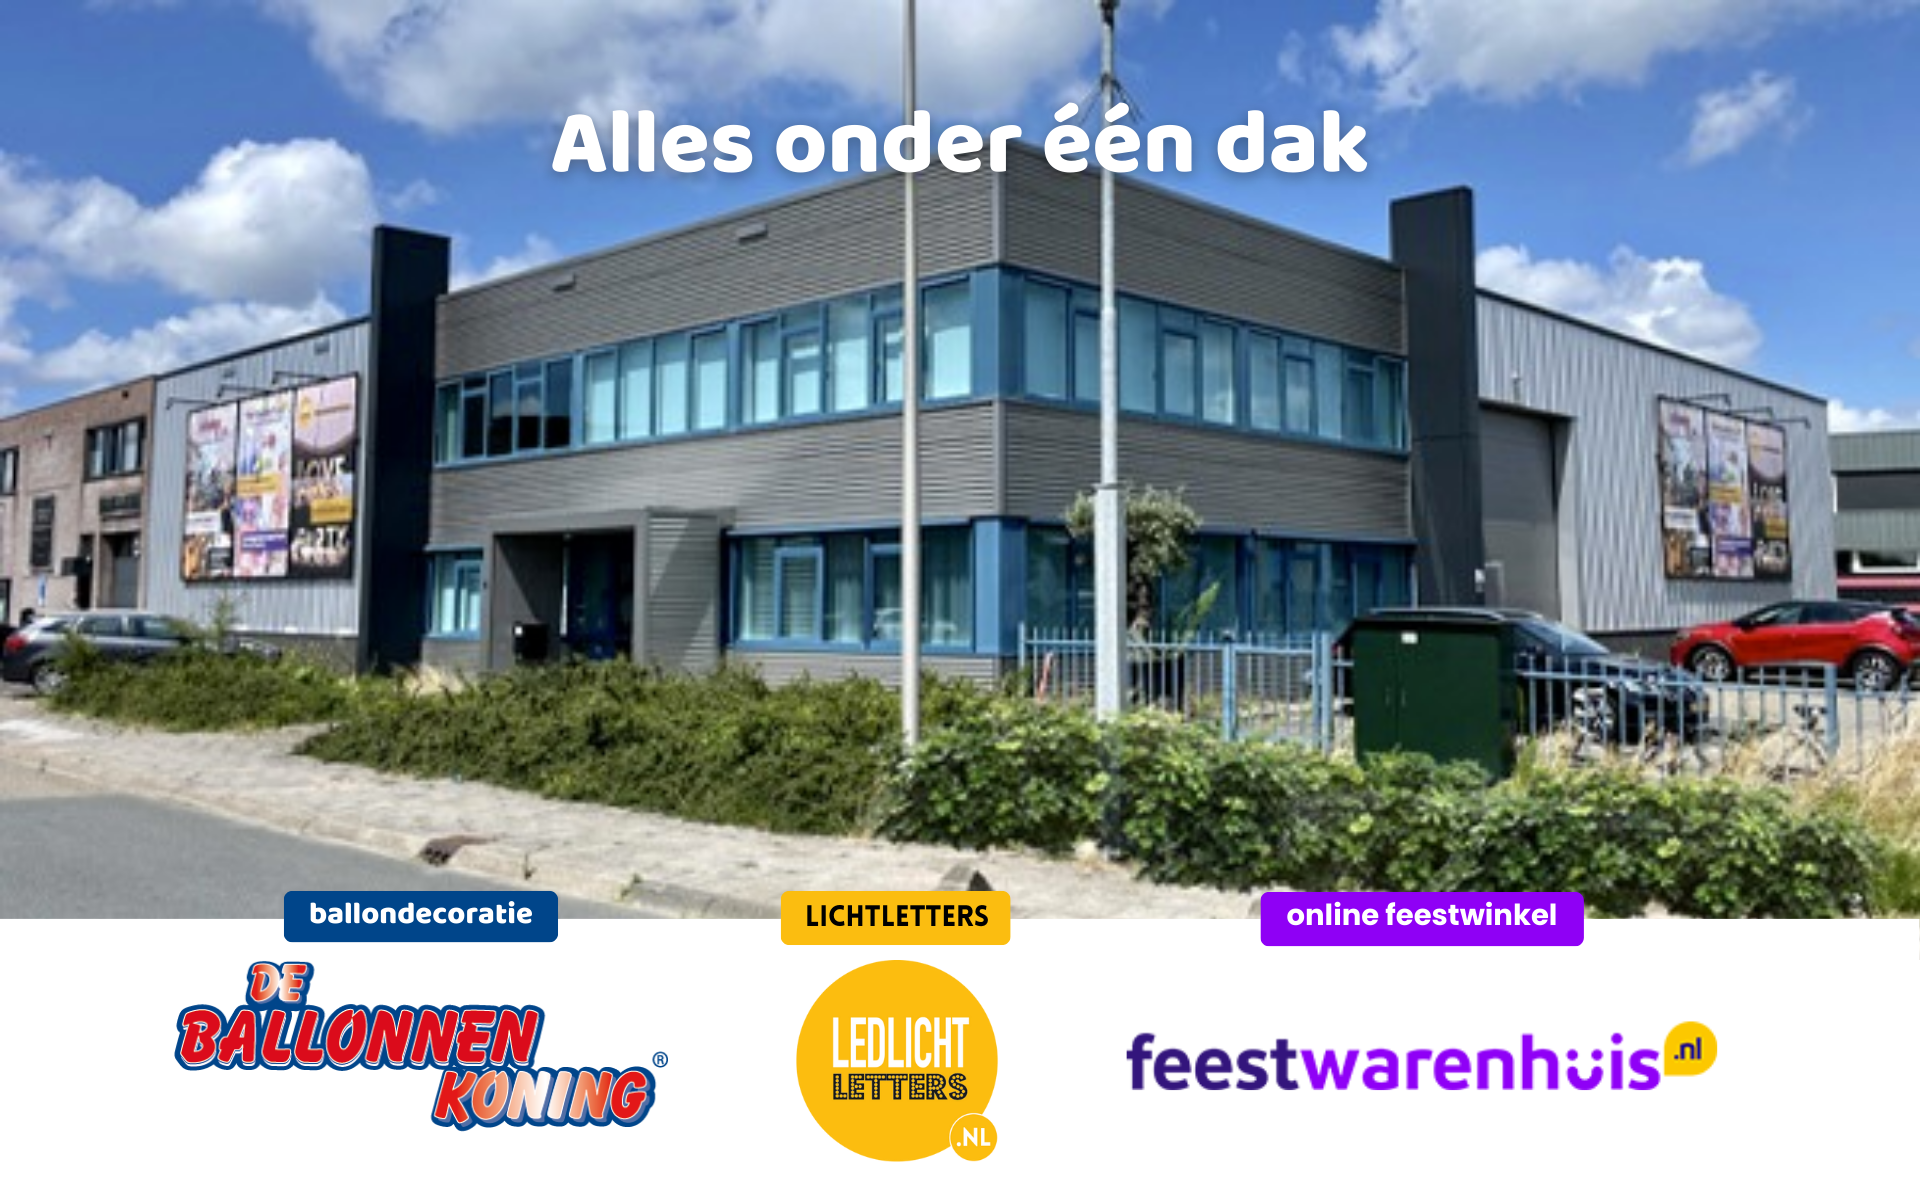 De Ballonnenkoning - LedLichtletters.nl - Feestwarenhuis.nl | Alles onder één dak!